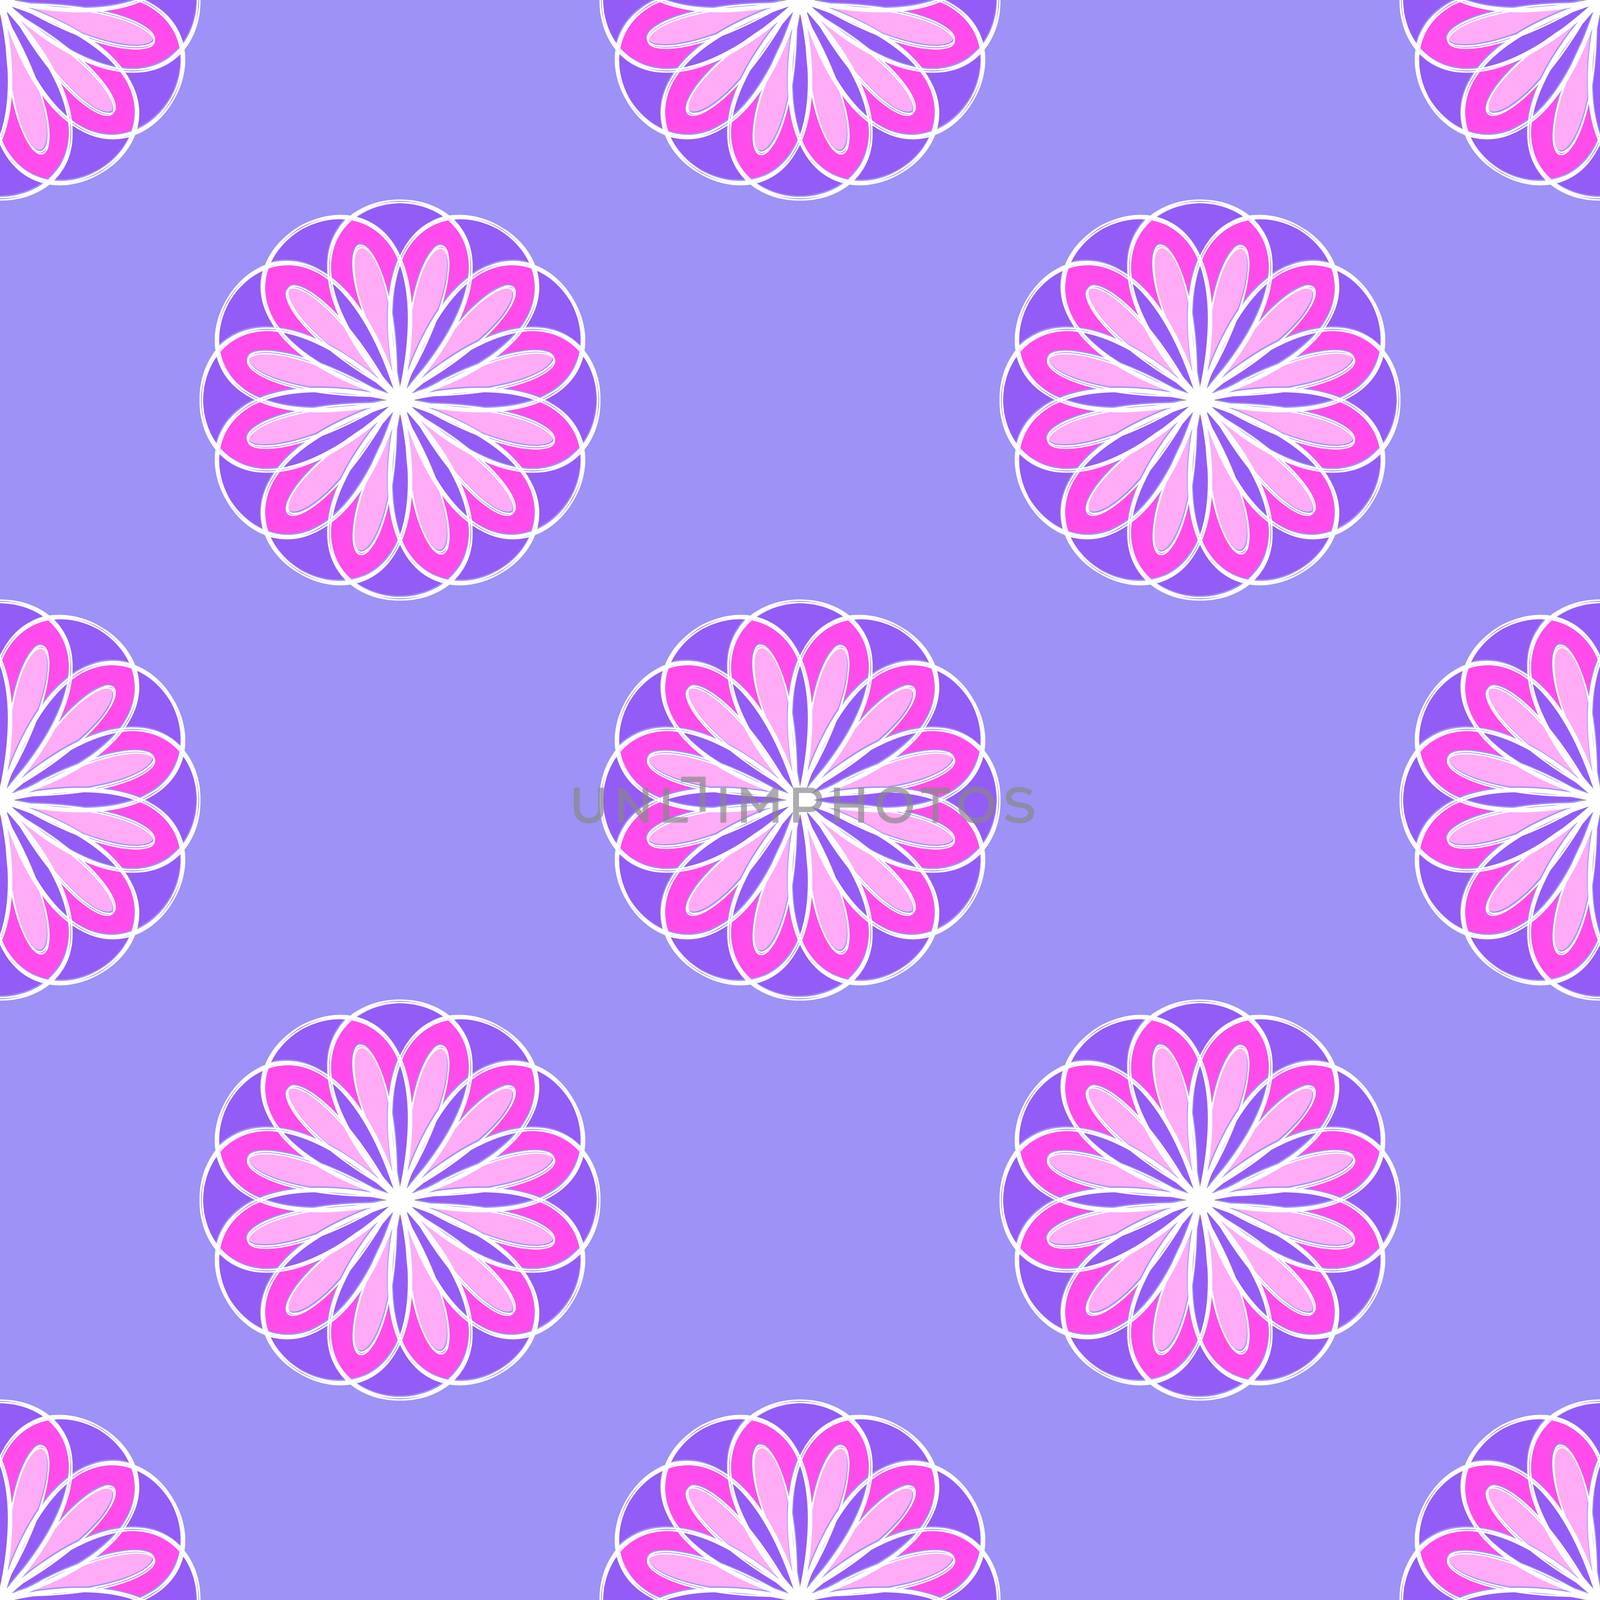 Floral vector pattern on the violet background